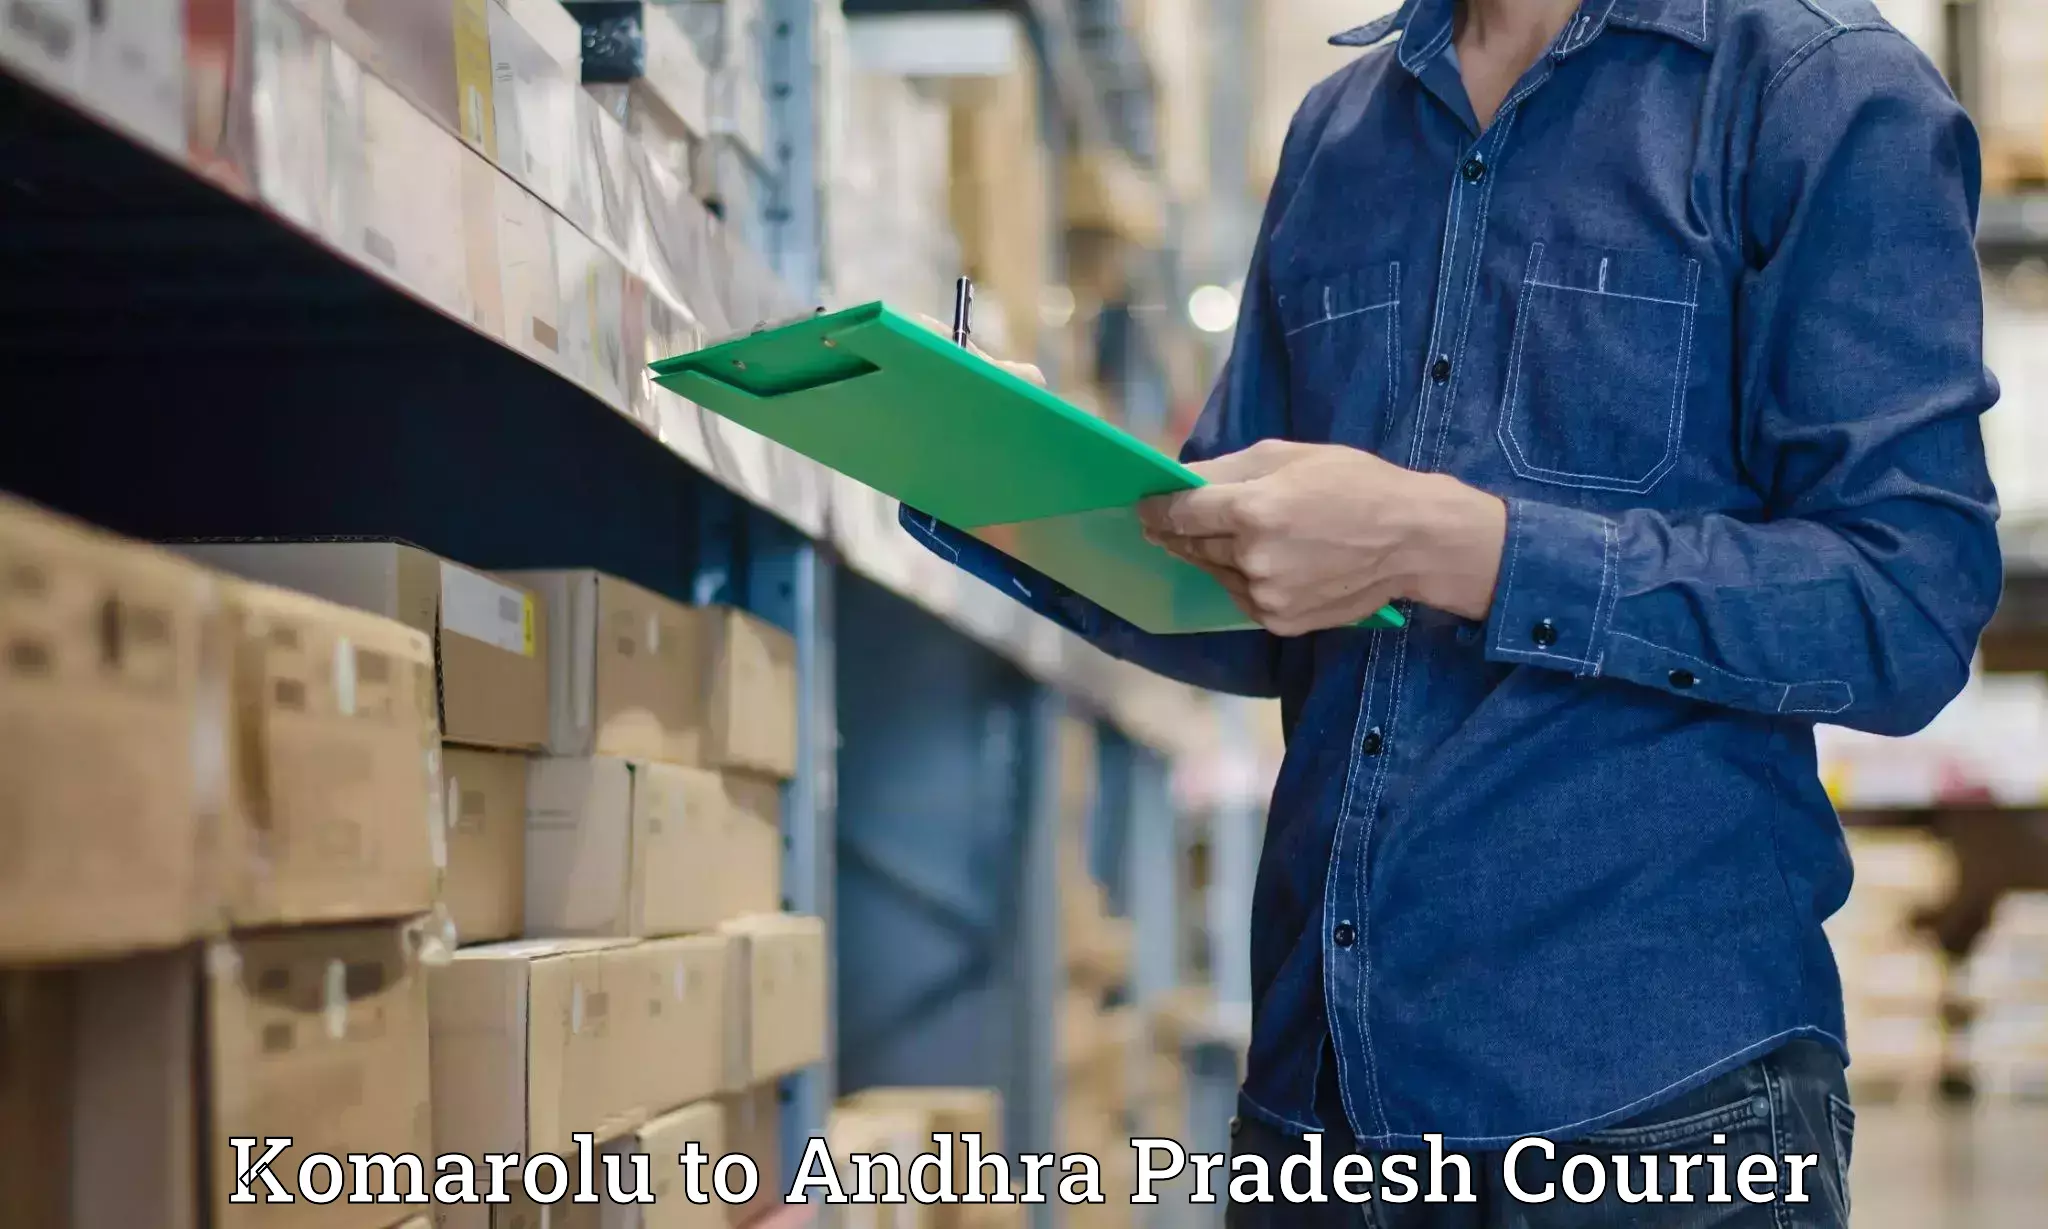 24/7 courier service Komarolu to Andhra Pradesh